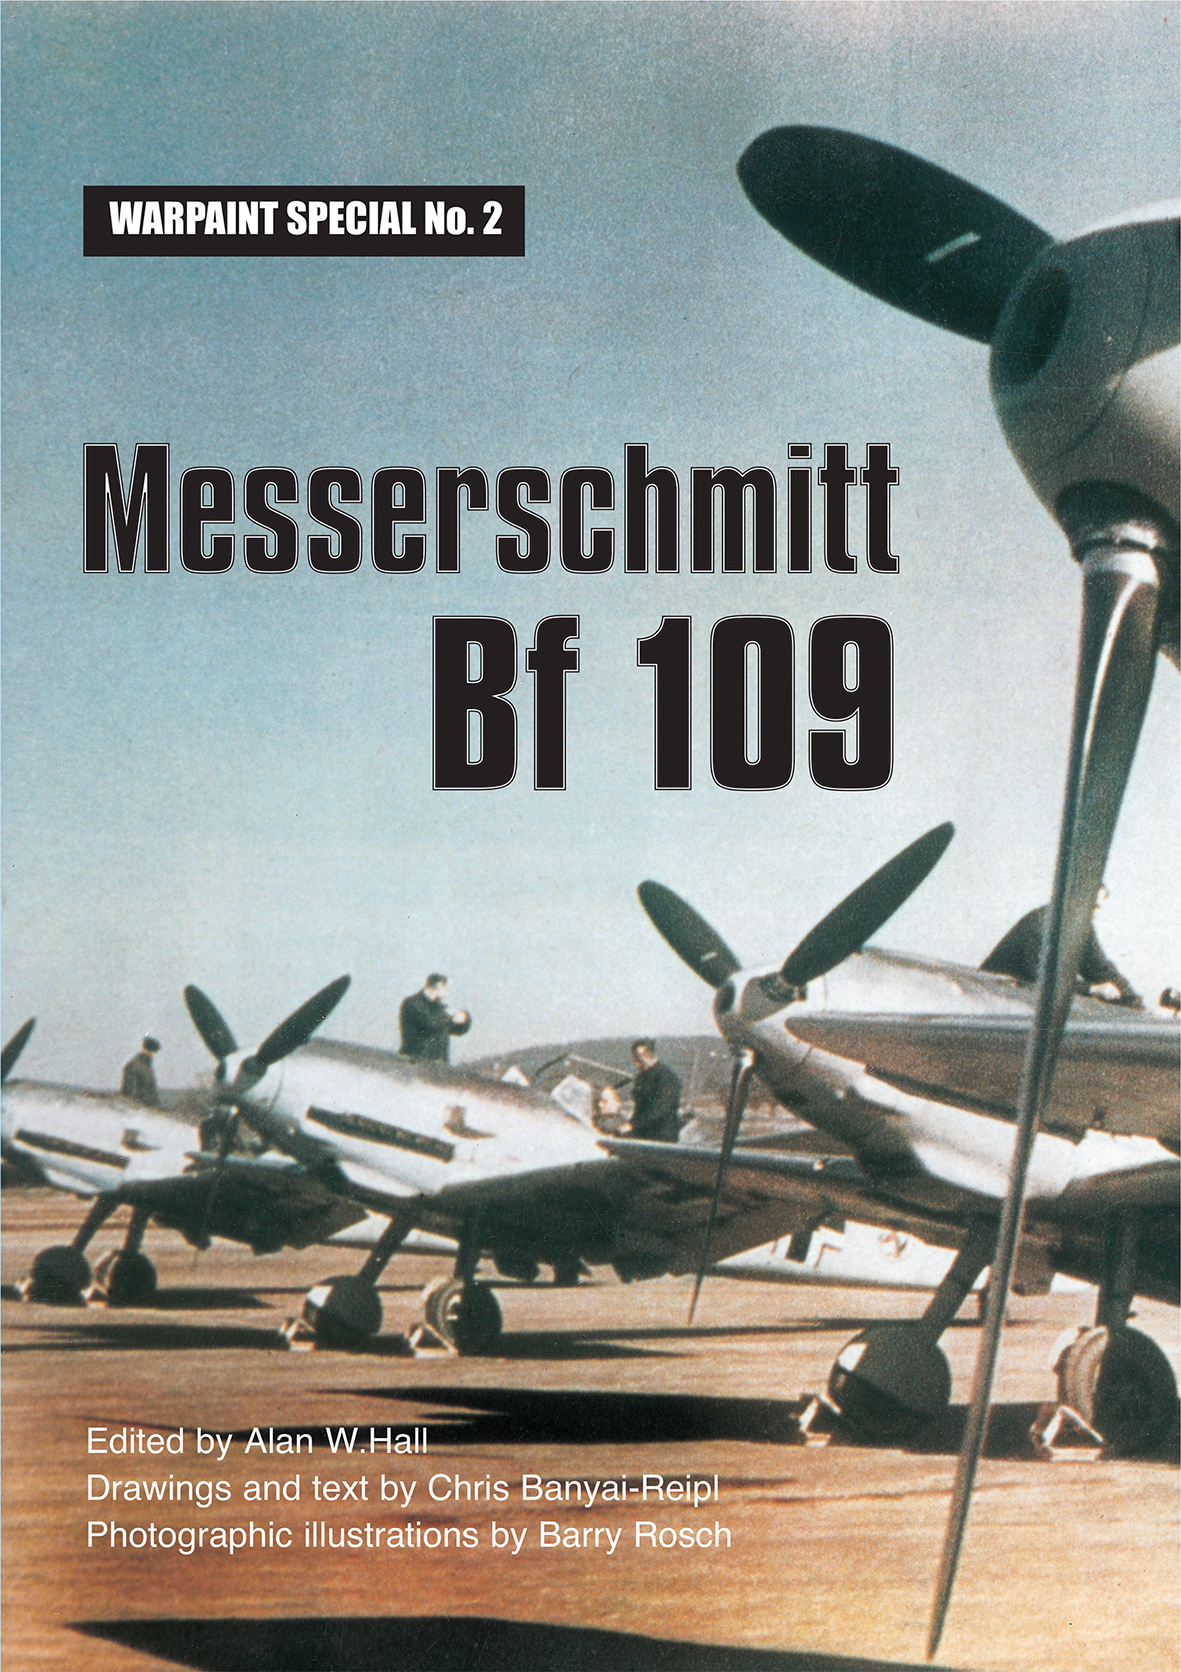 Guideline Publications Ltd Messerschmitt Bf109 re print Warpaint Special no 2 